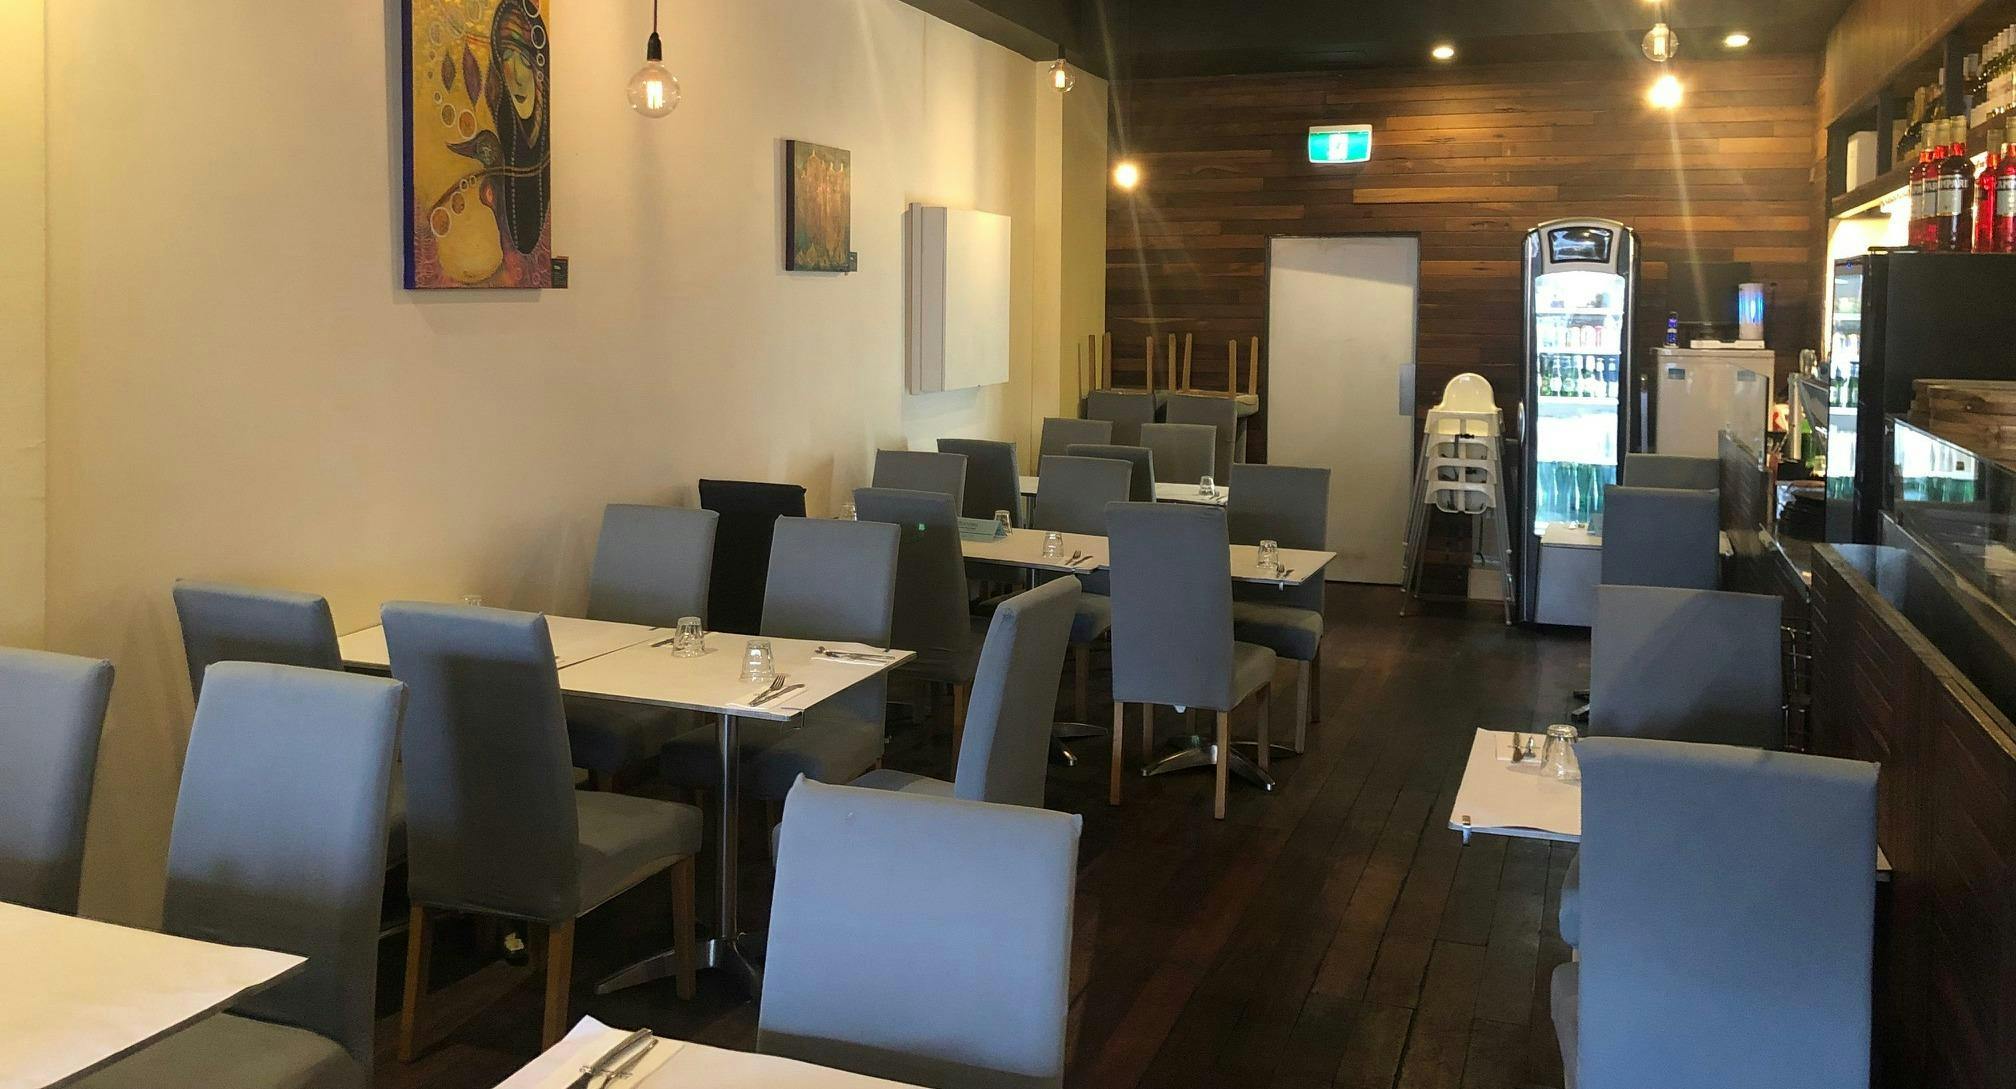 Photo of restaurant Portorosa Cafe - Fremantle in Fremantle, Perth